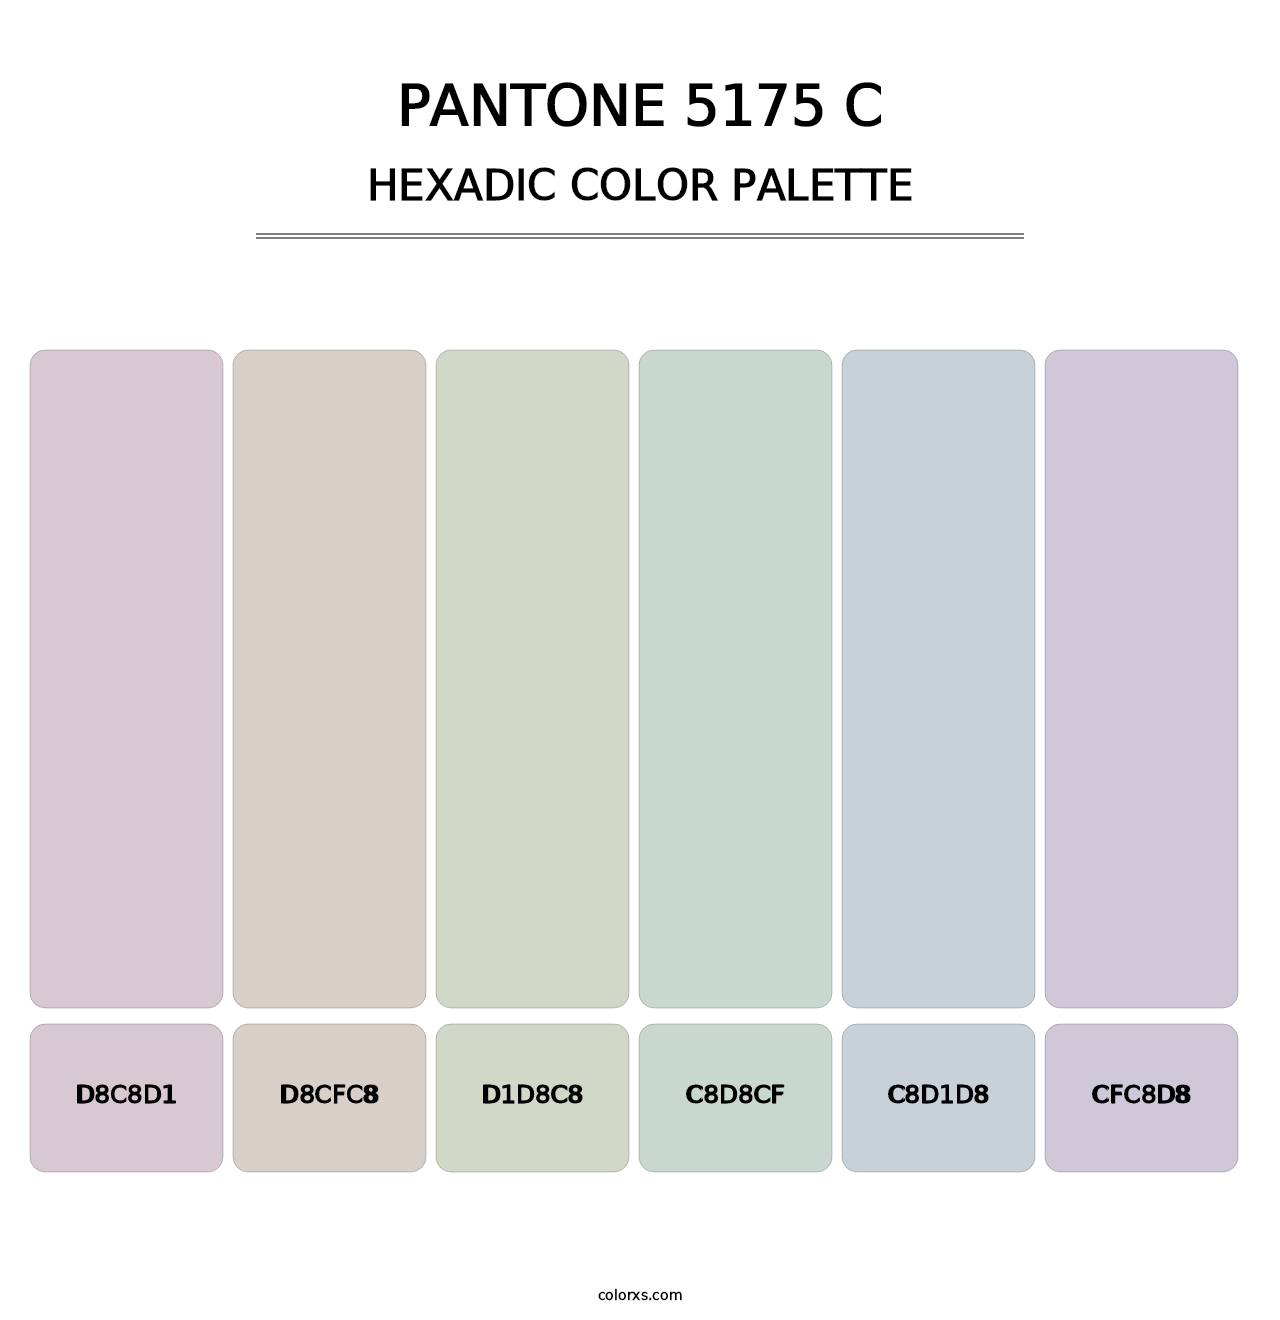 PANTONE 5175 C - Hexadic Color Palette